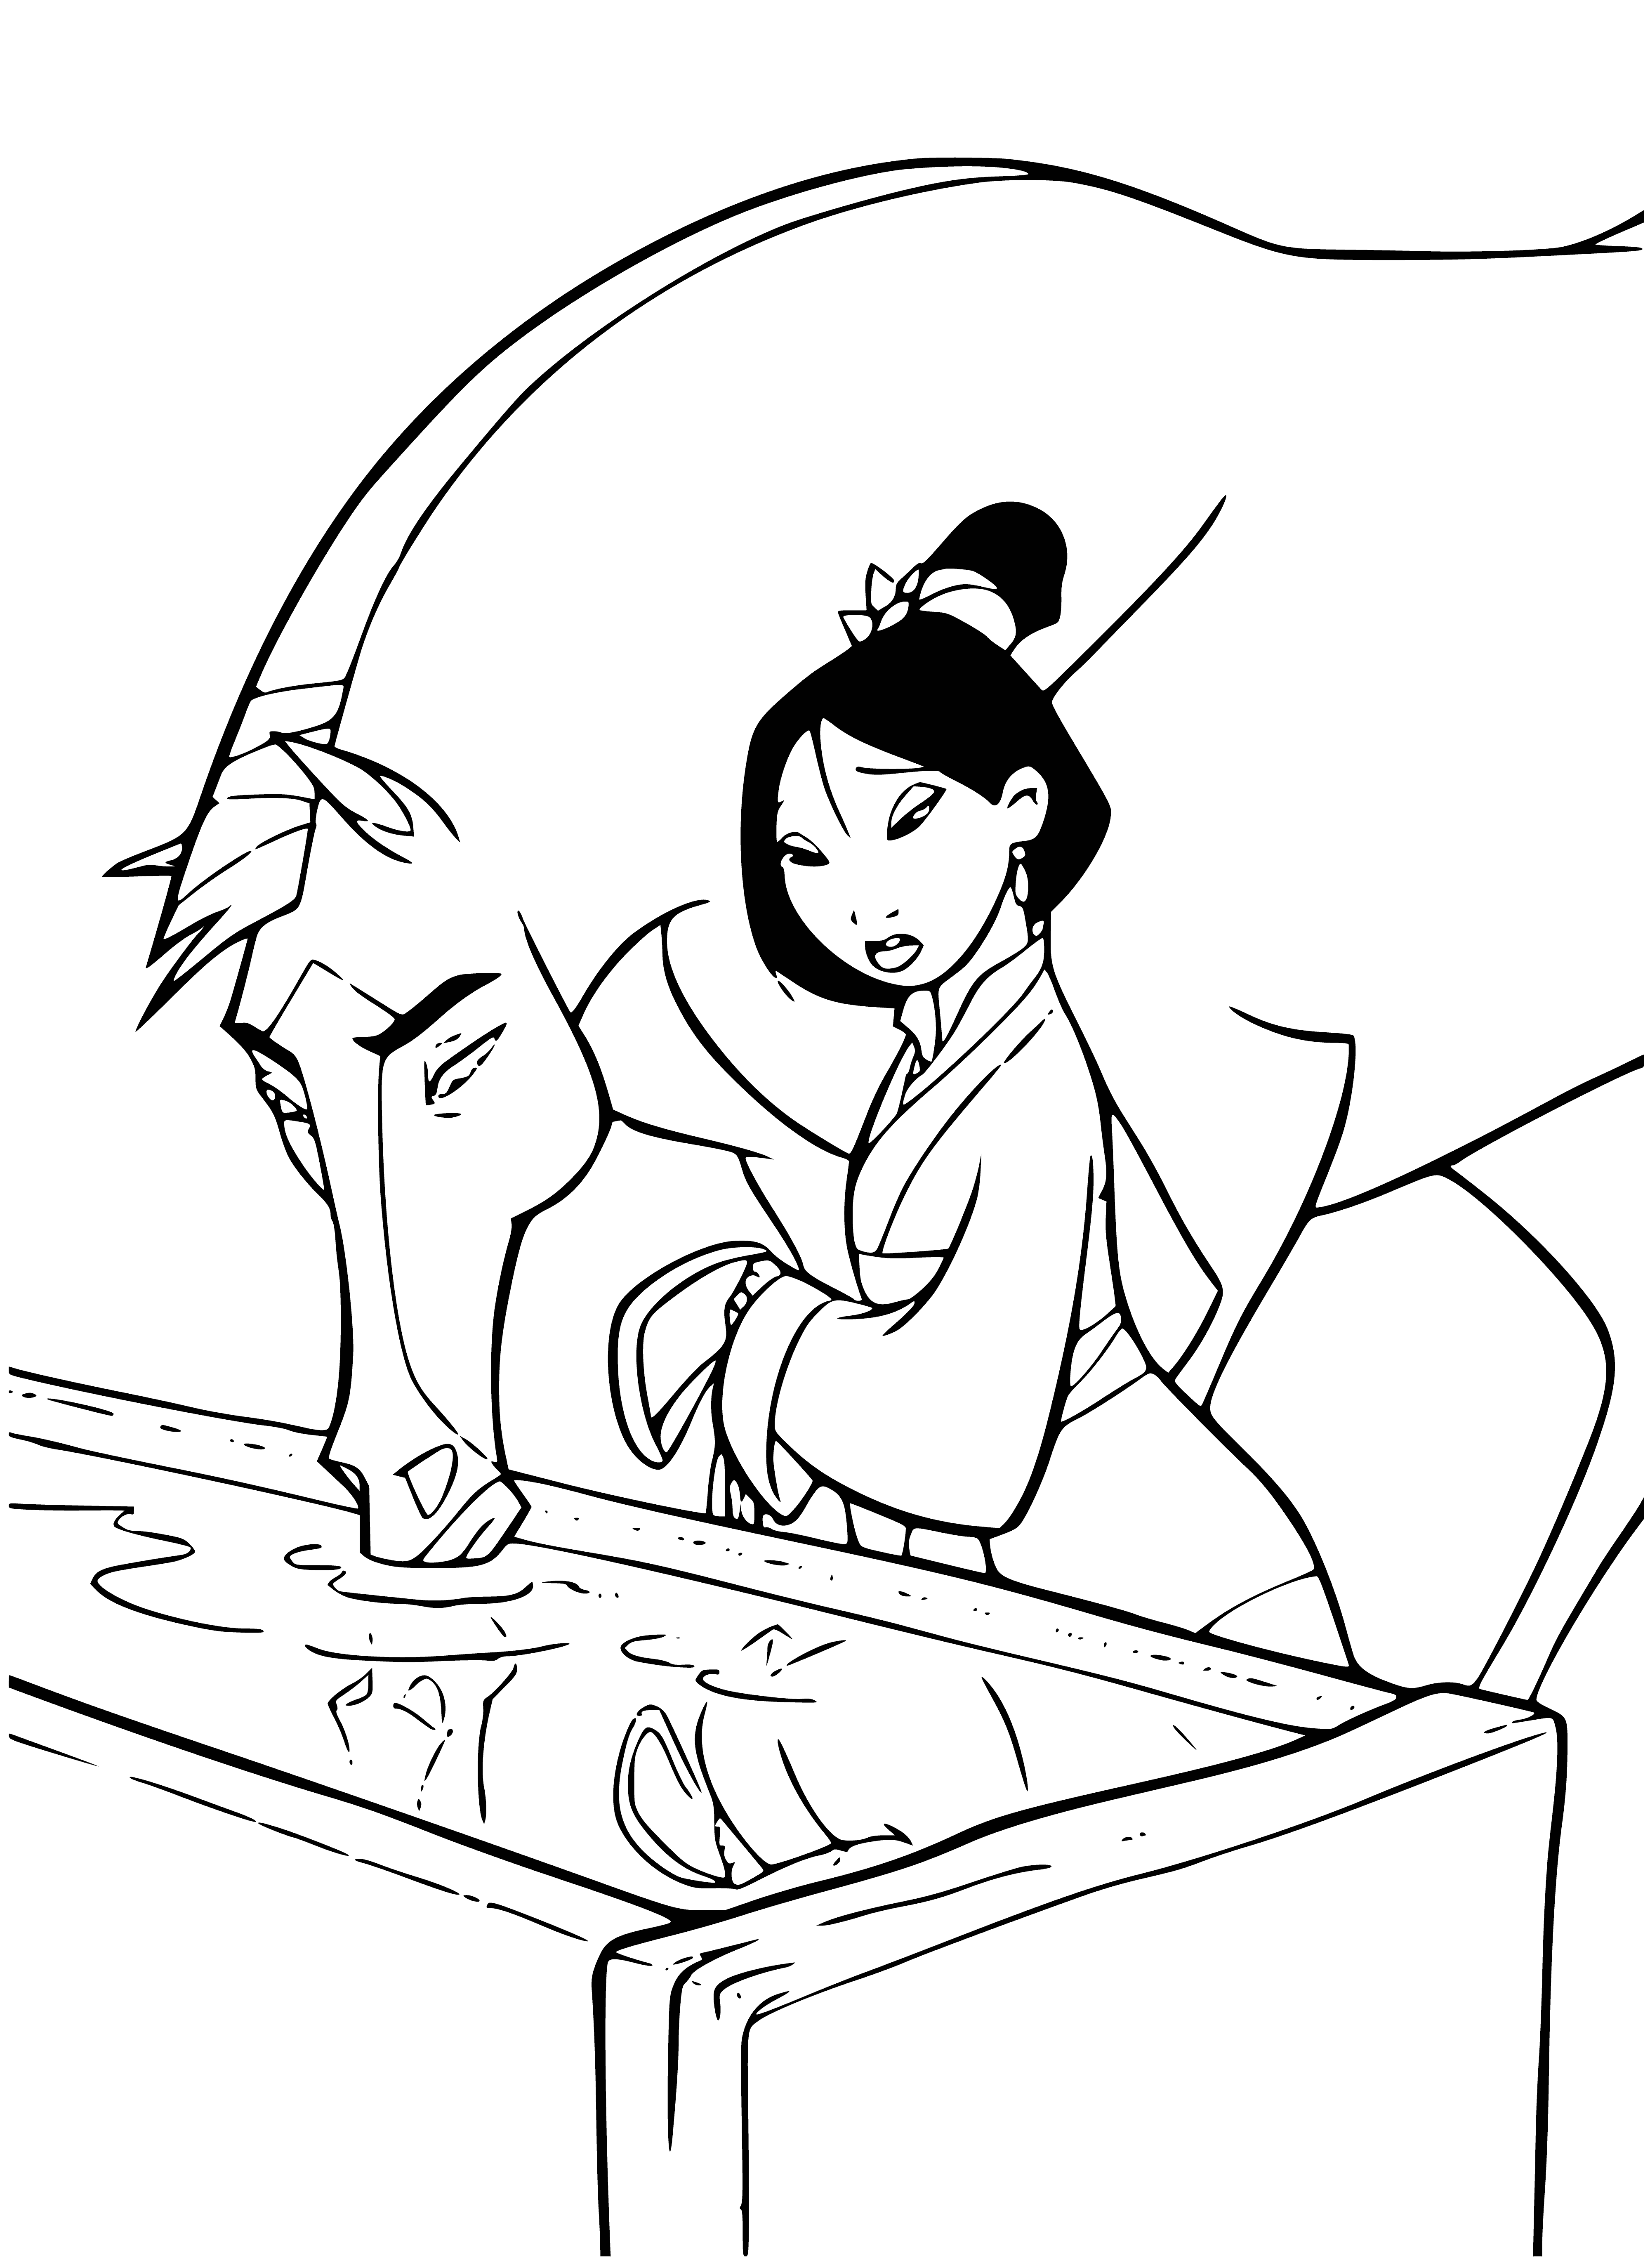 Mulan coloring page